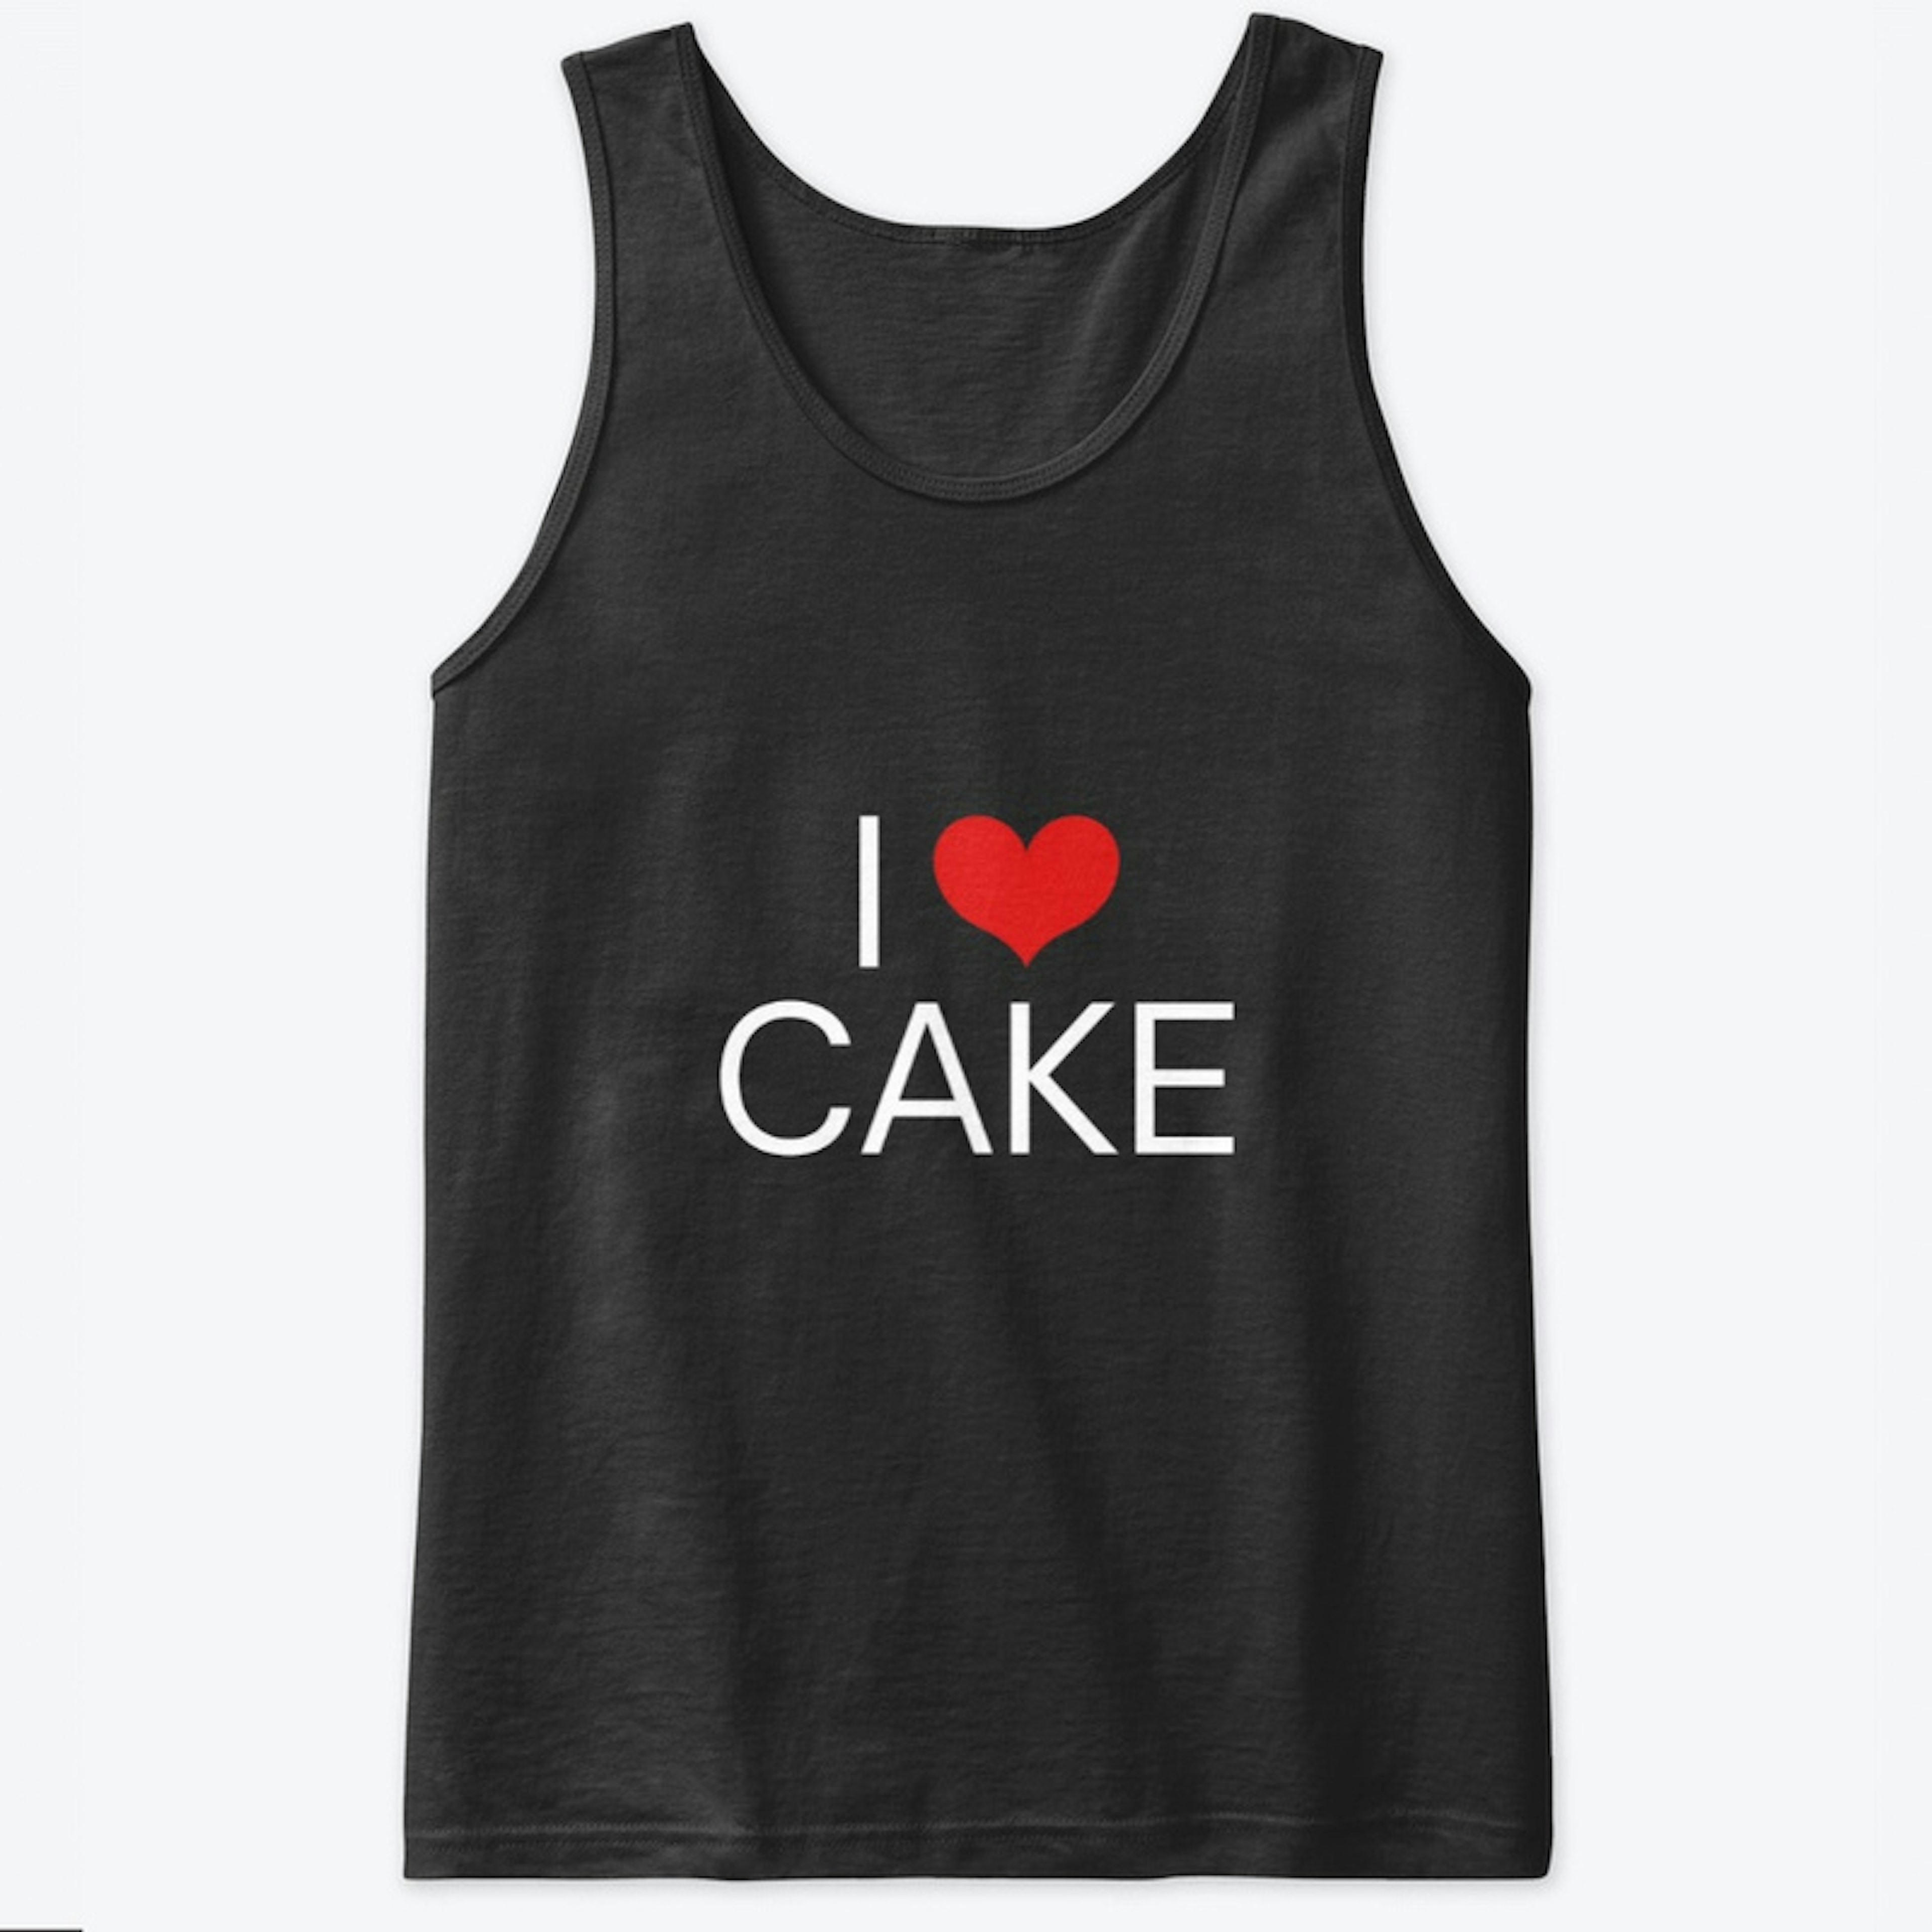 Legacy Cakery - I LOVE CAKE